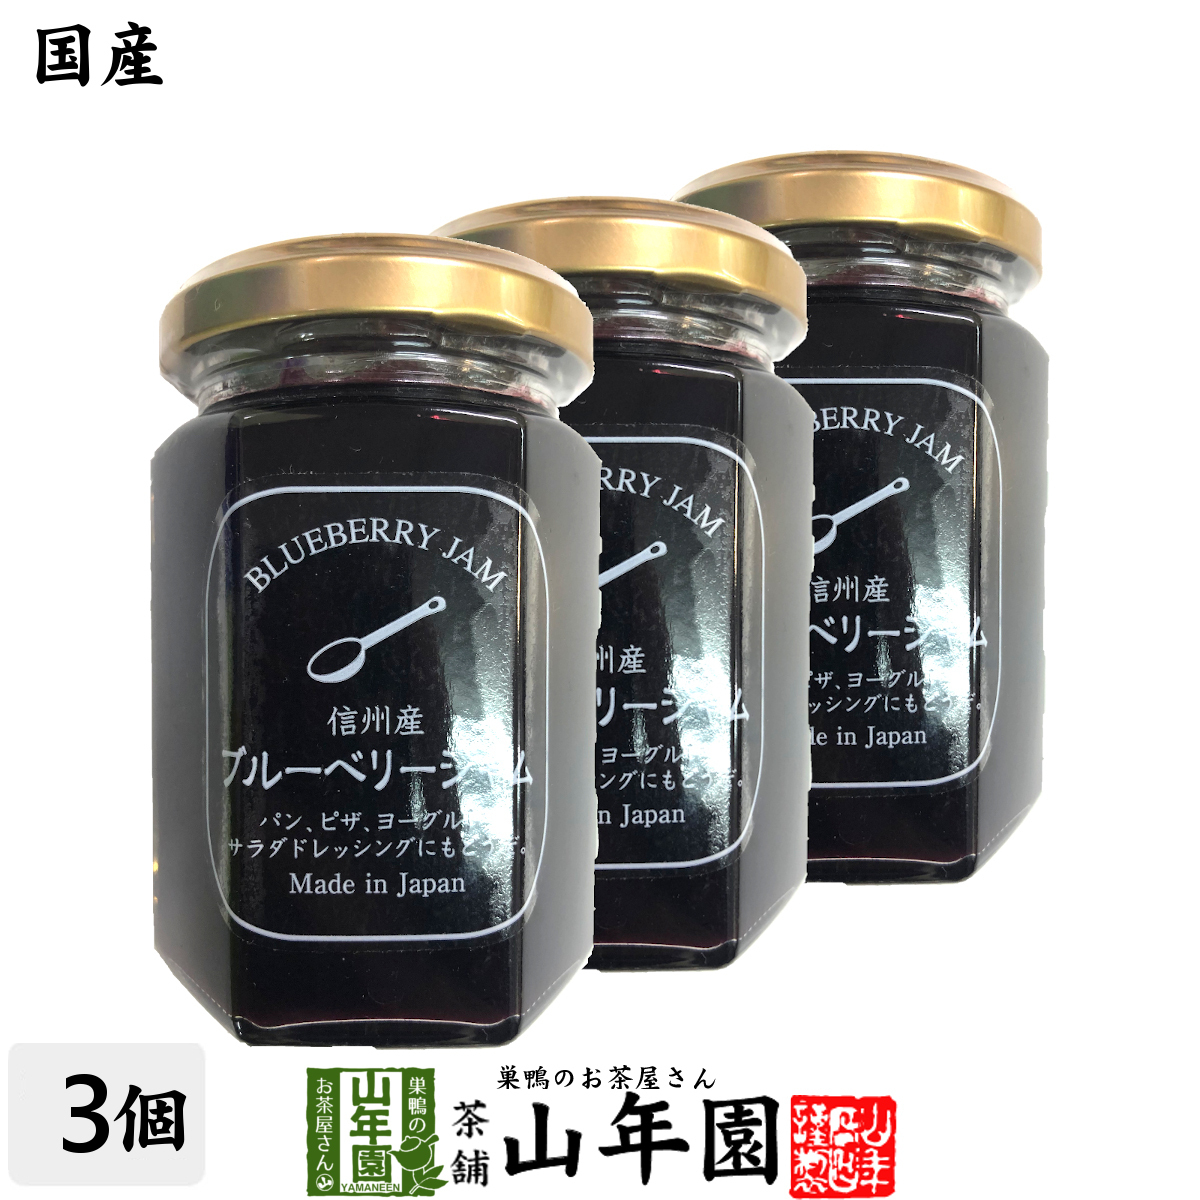  jam domestic production Shinshu production blueberry jam 150g×3 piece set free shipping 